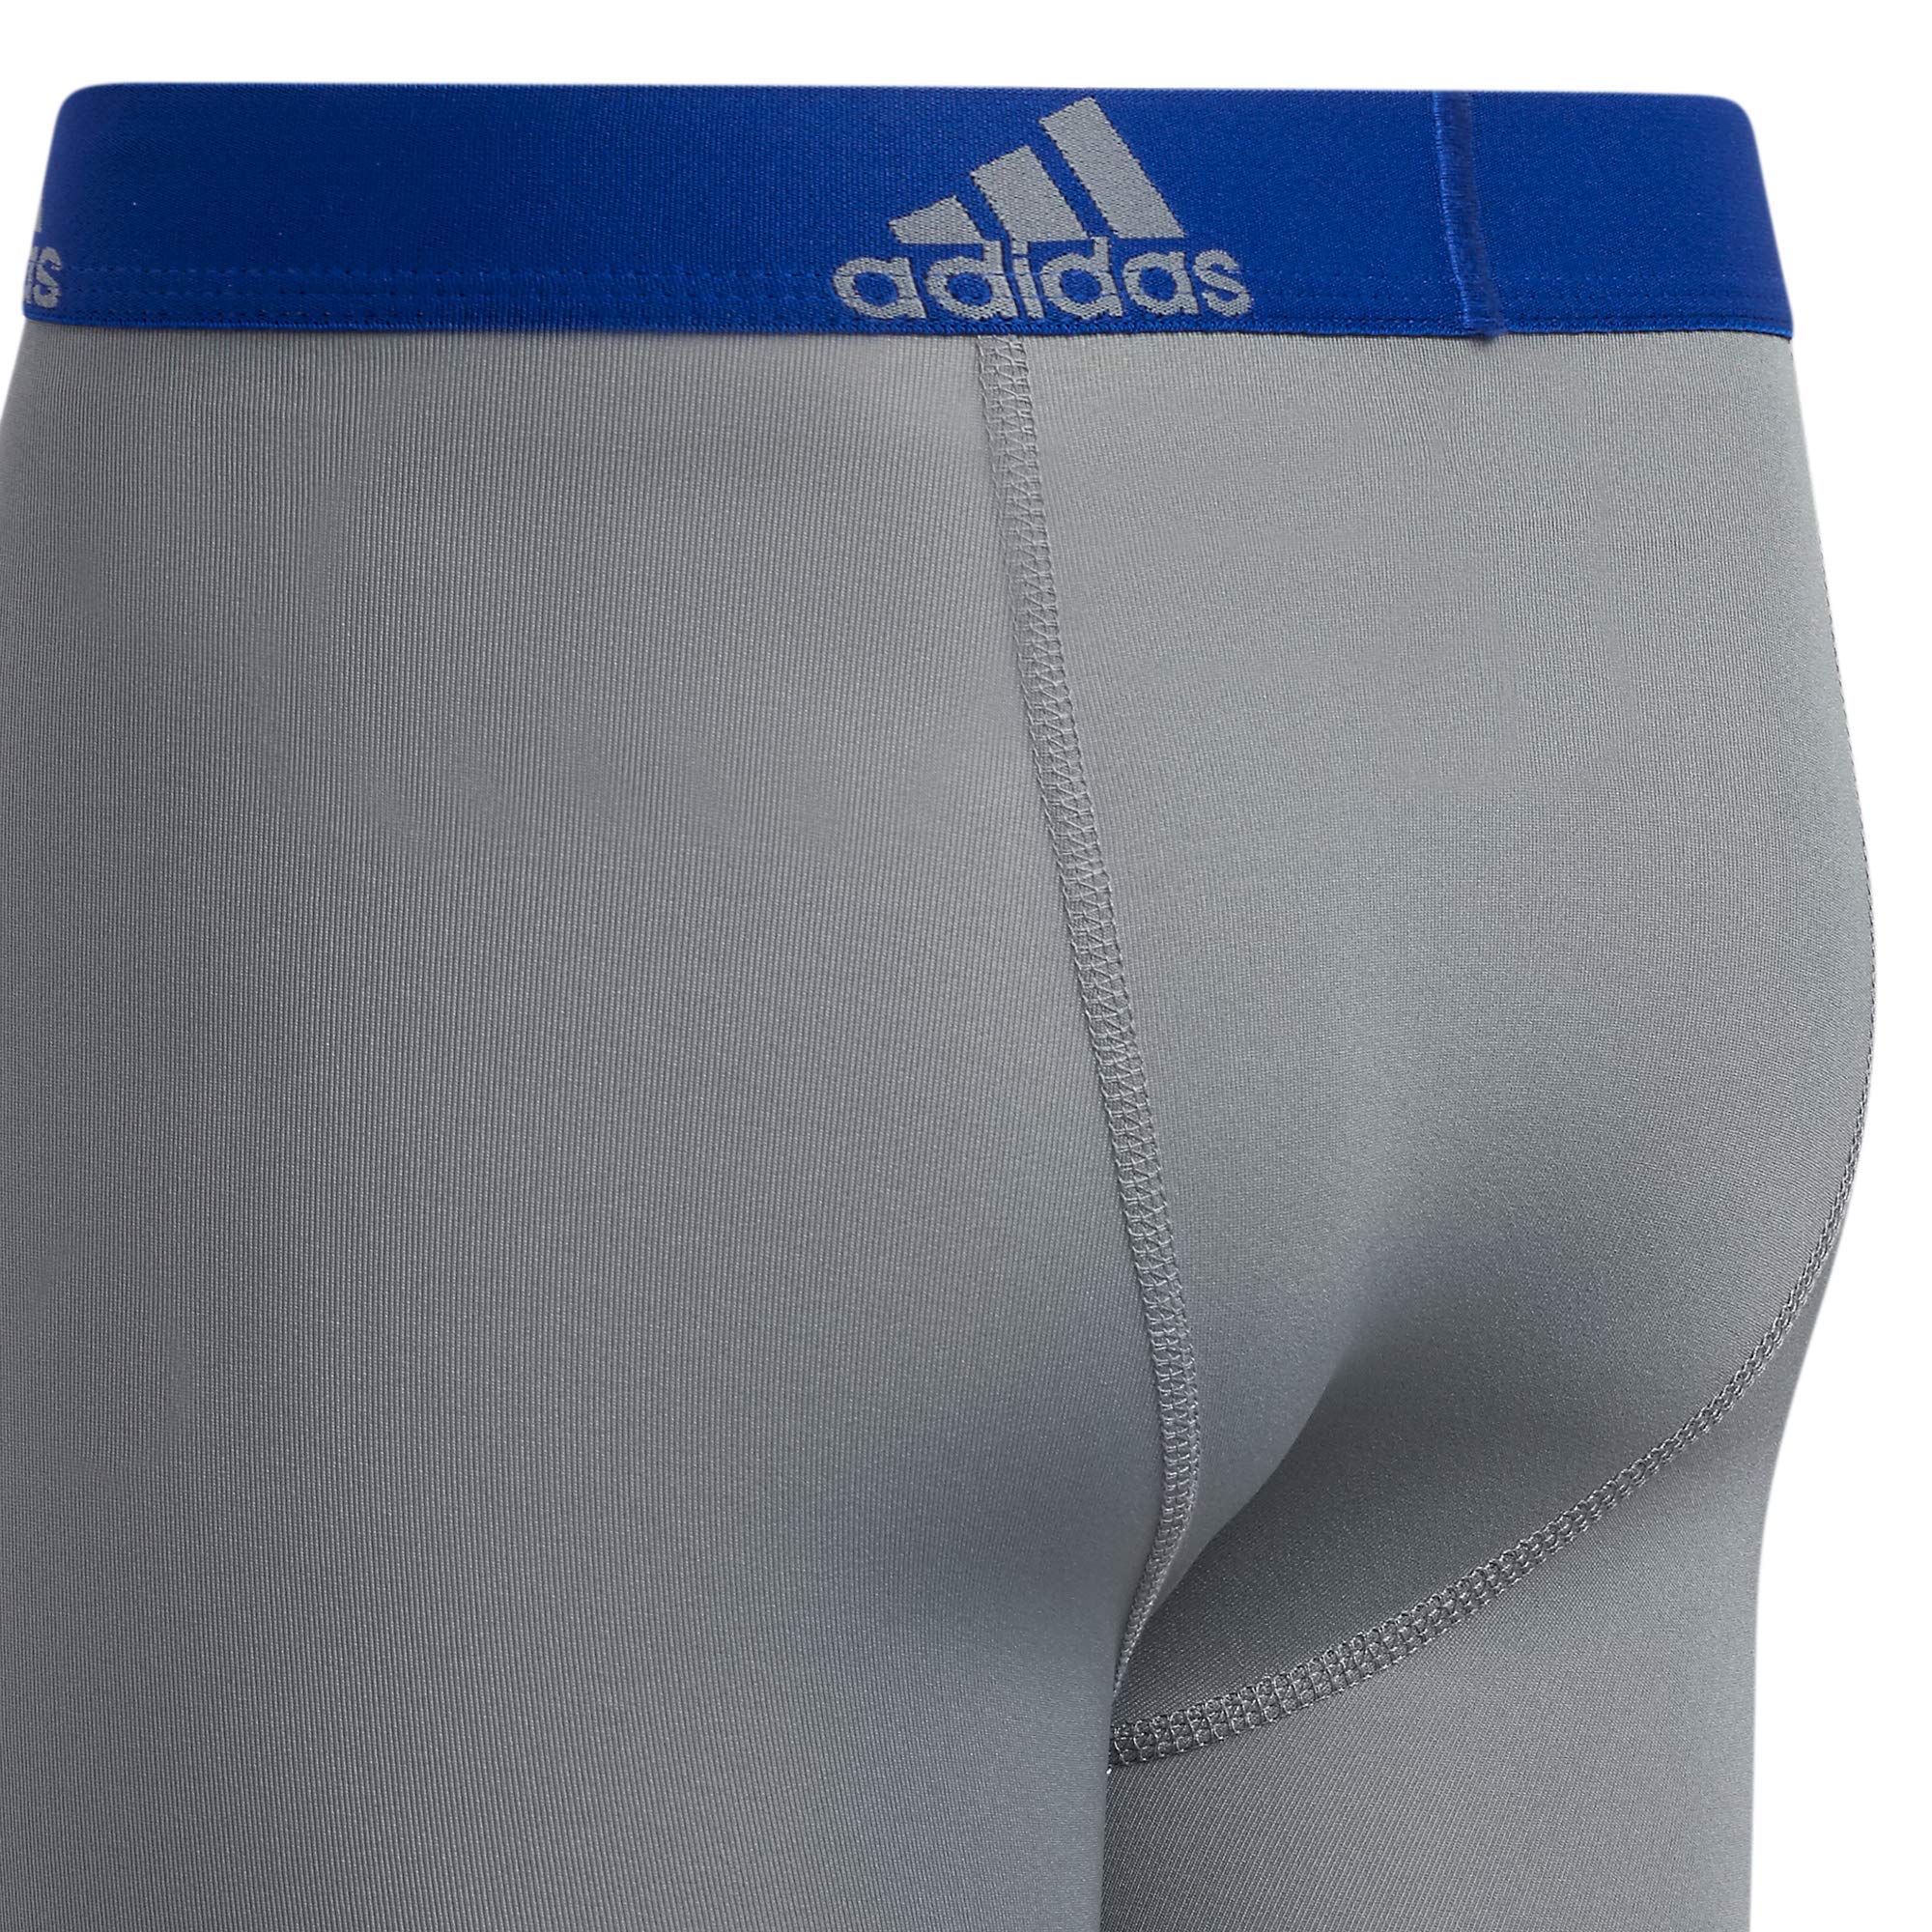 adidas Kids-Boy's Performance Long Boxer Briefs Underwear (4-Pack)